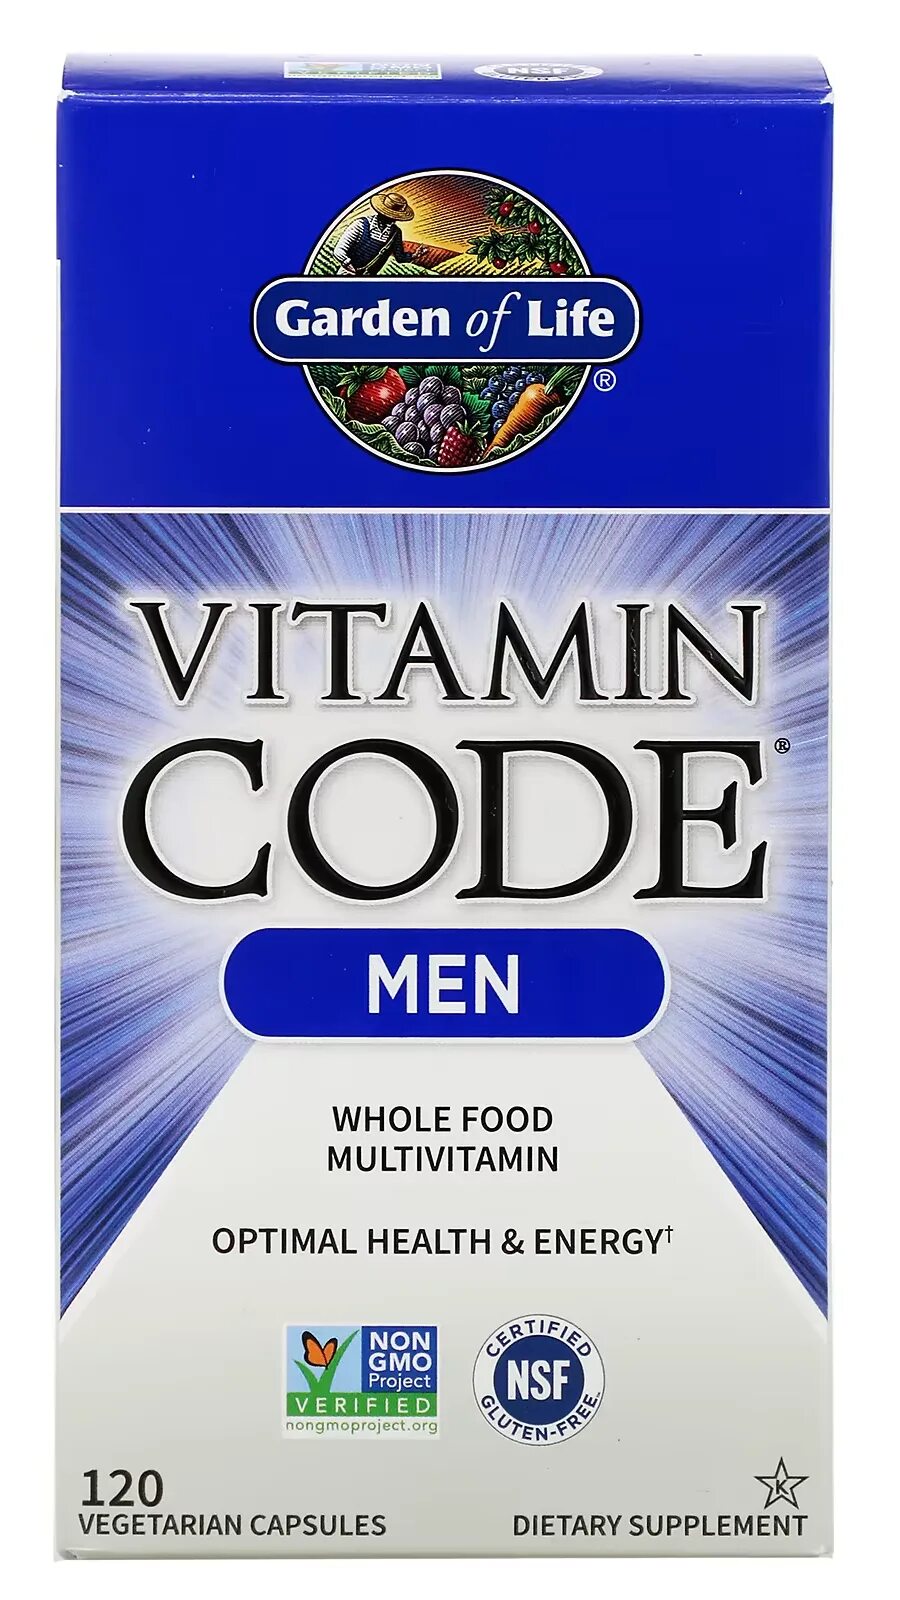 Vitamin code prenatal. Garden of Life Vitamin code Raw Zinc, цинк (60 капсул). Gardens Life витамины Vitamin code. Garden of Life витамины women 50. Garden of Life Vitamin code women.